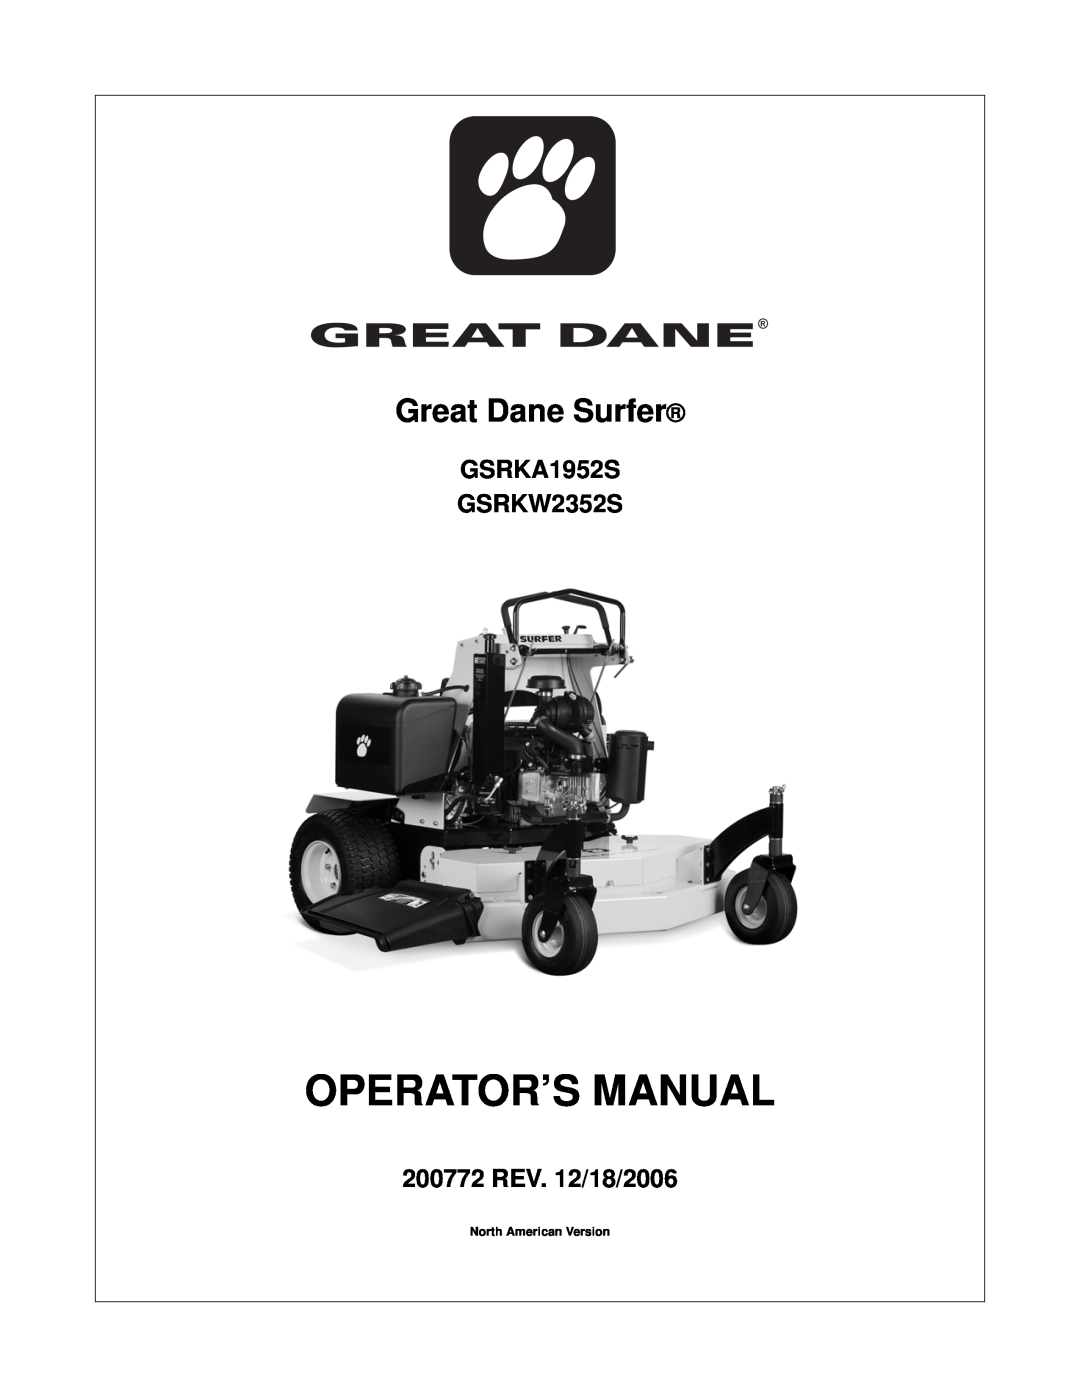 Great Dane manual Operator’S Manual, Great Dane Surfer, GSRKA1952S GSRKW2352S, 200772 REV. 12/18/2006 